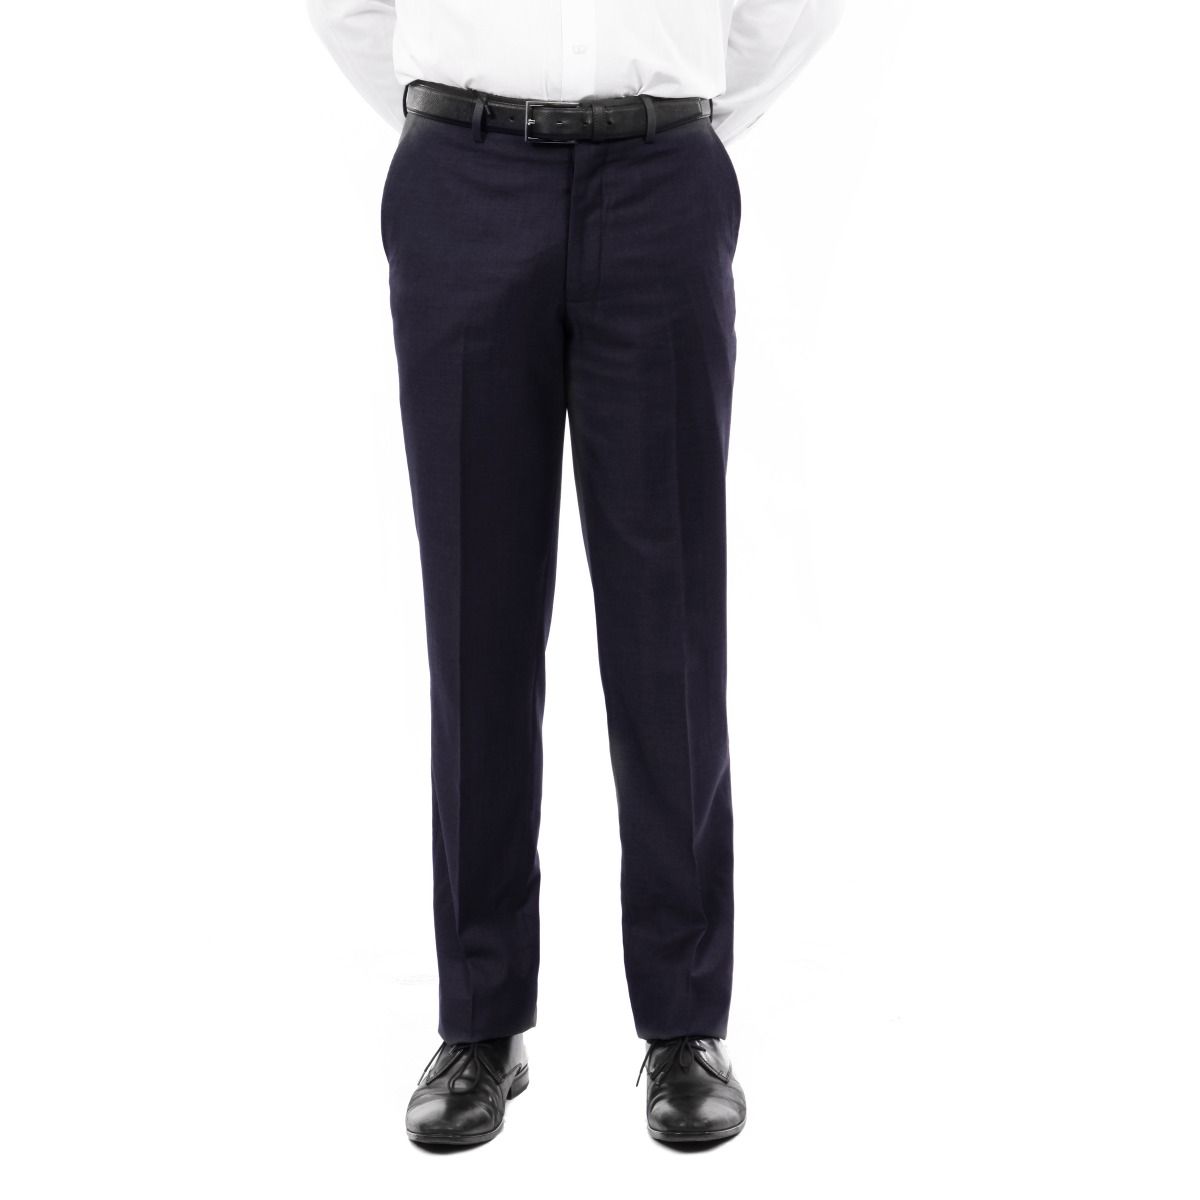 Zegarie Men's Outlet Flat Front Pants - Wool Slim Fit